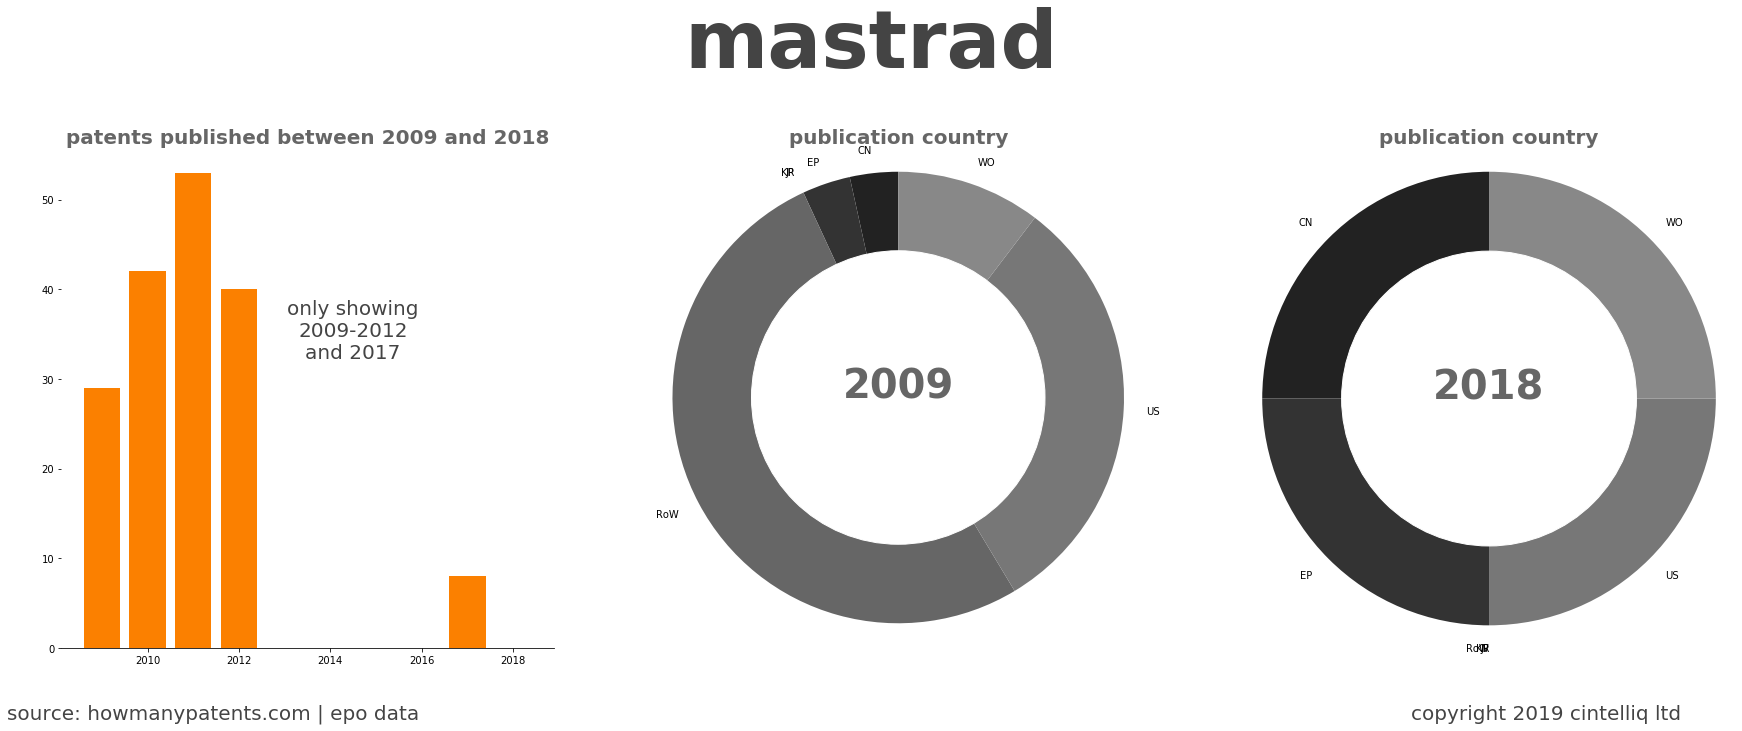 summary of patents for Mastrad